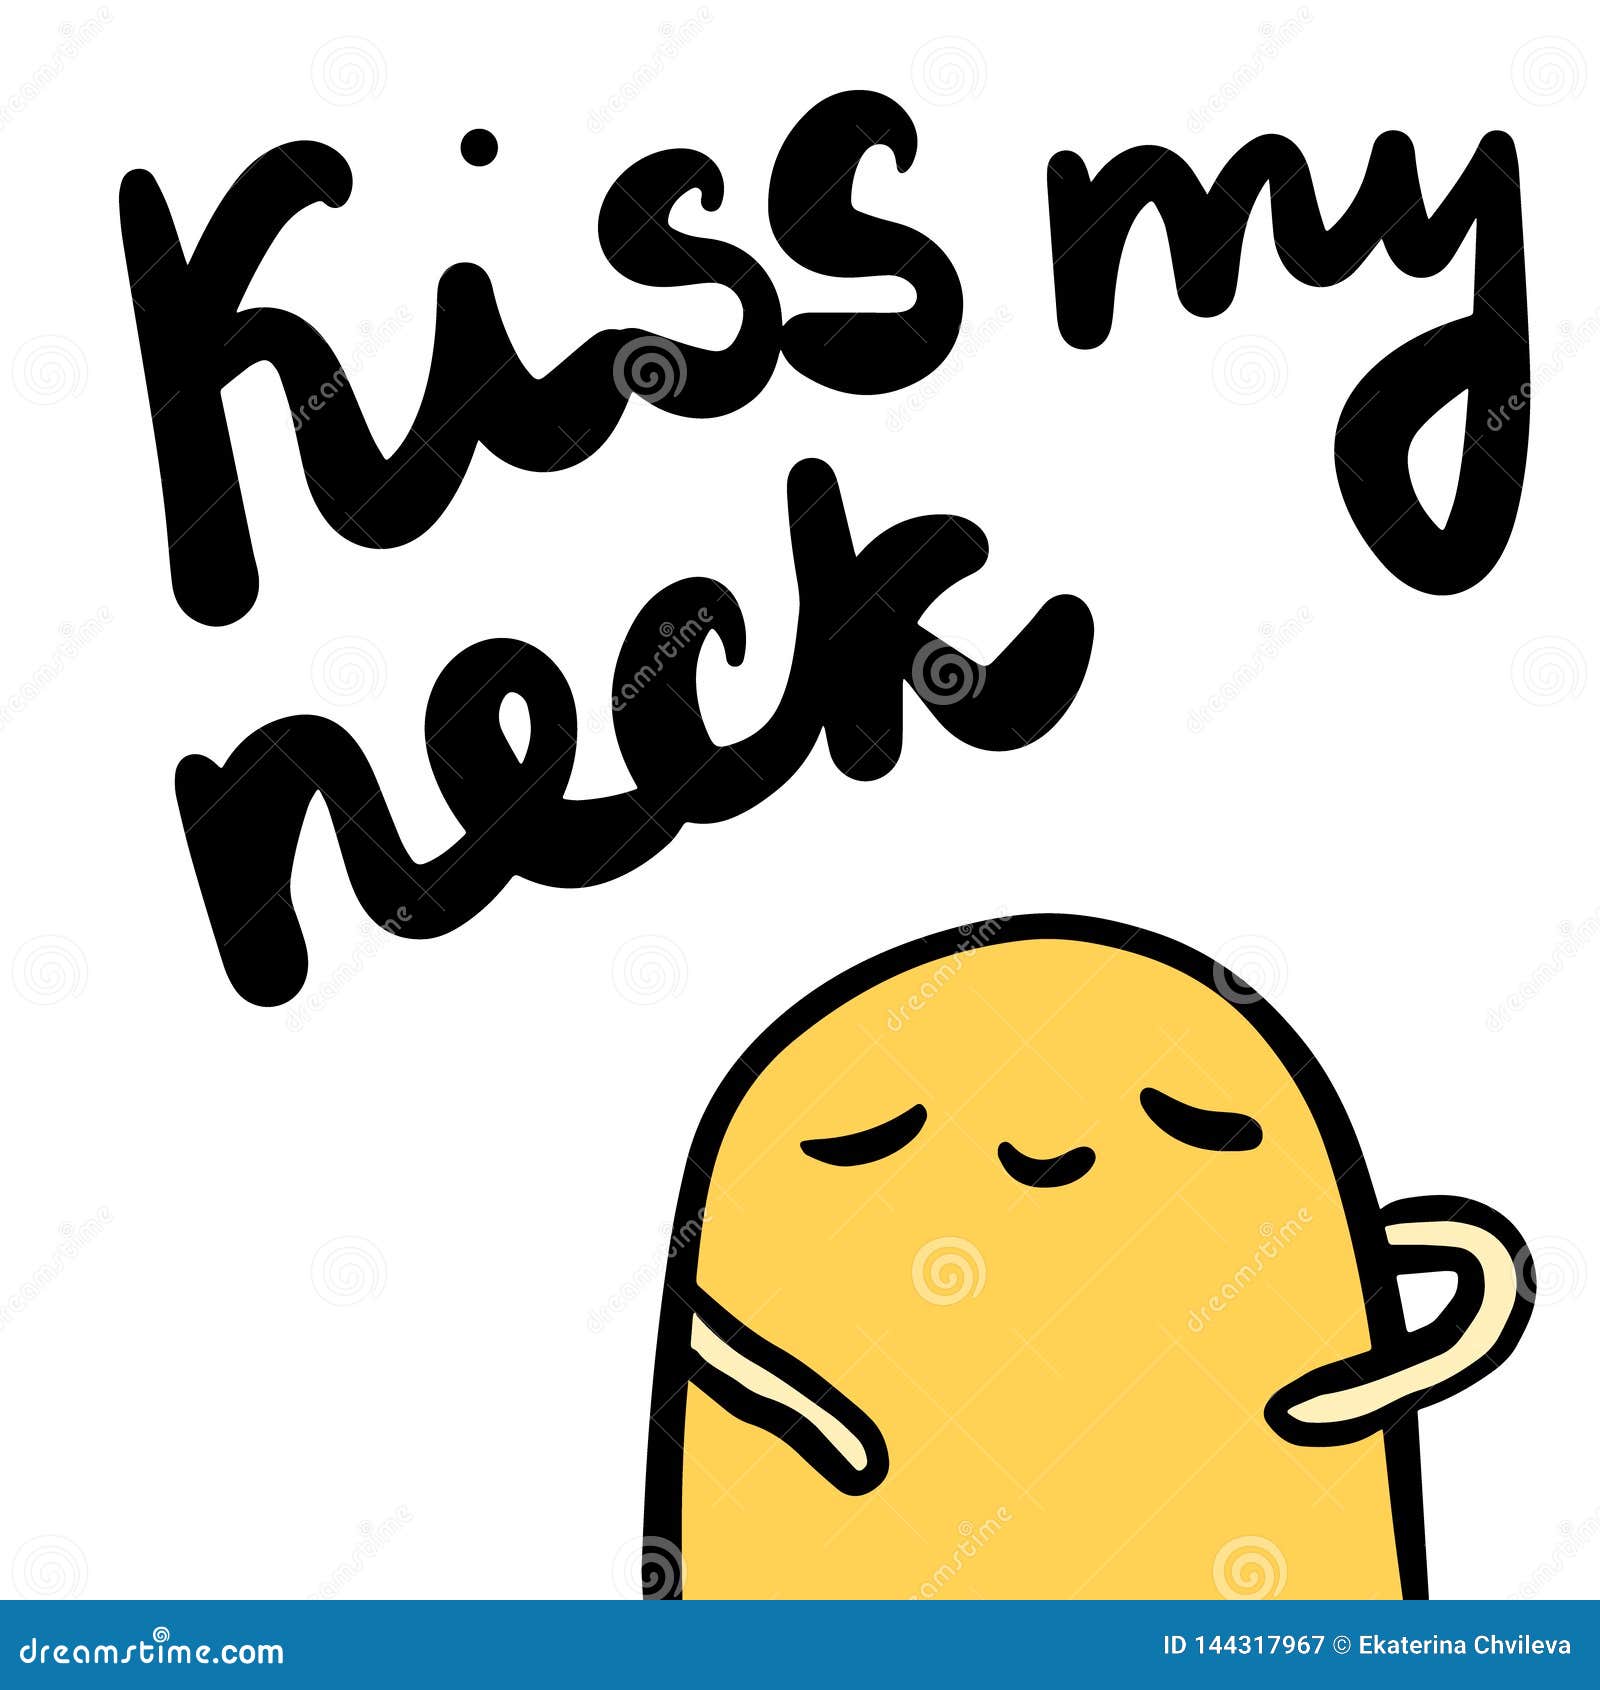 kiss my neck